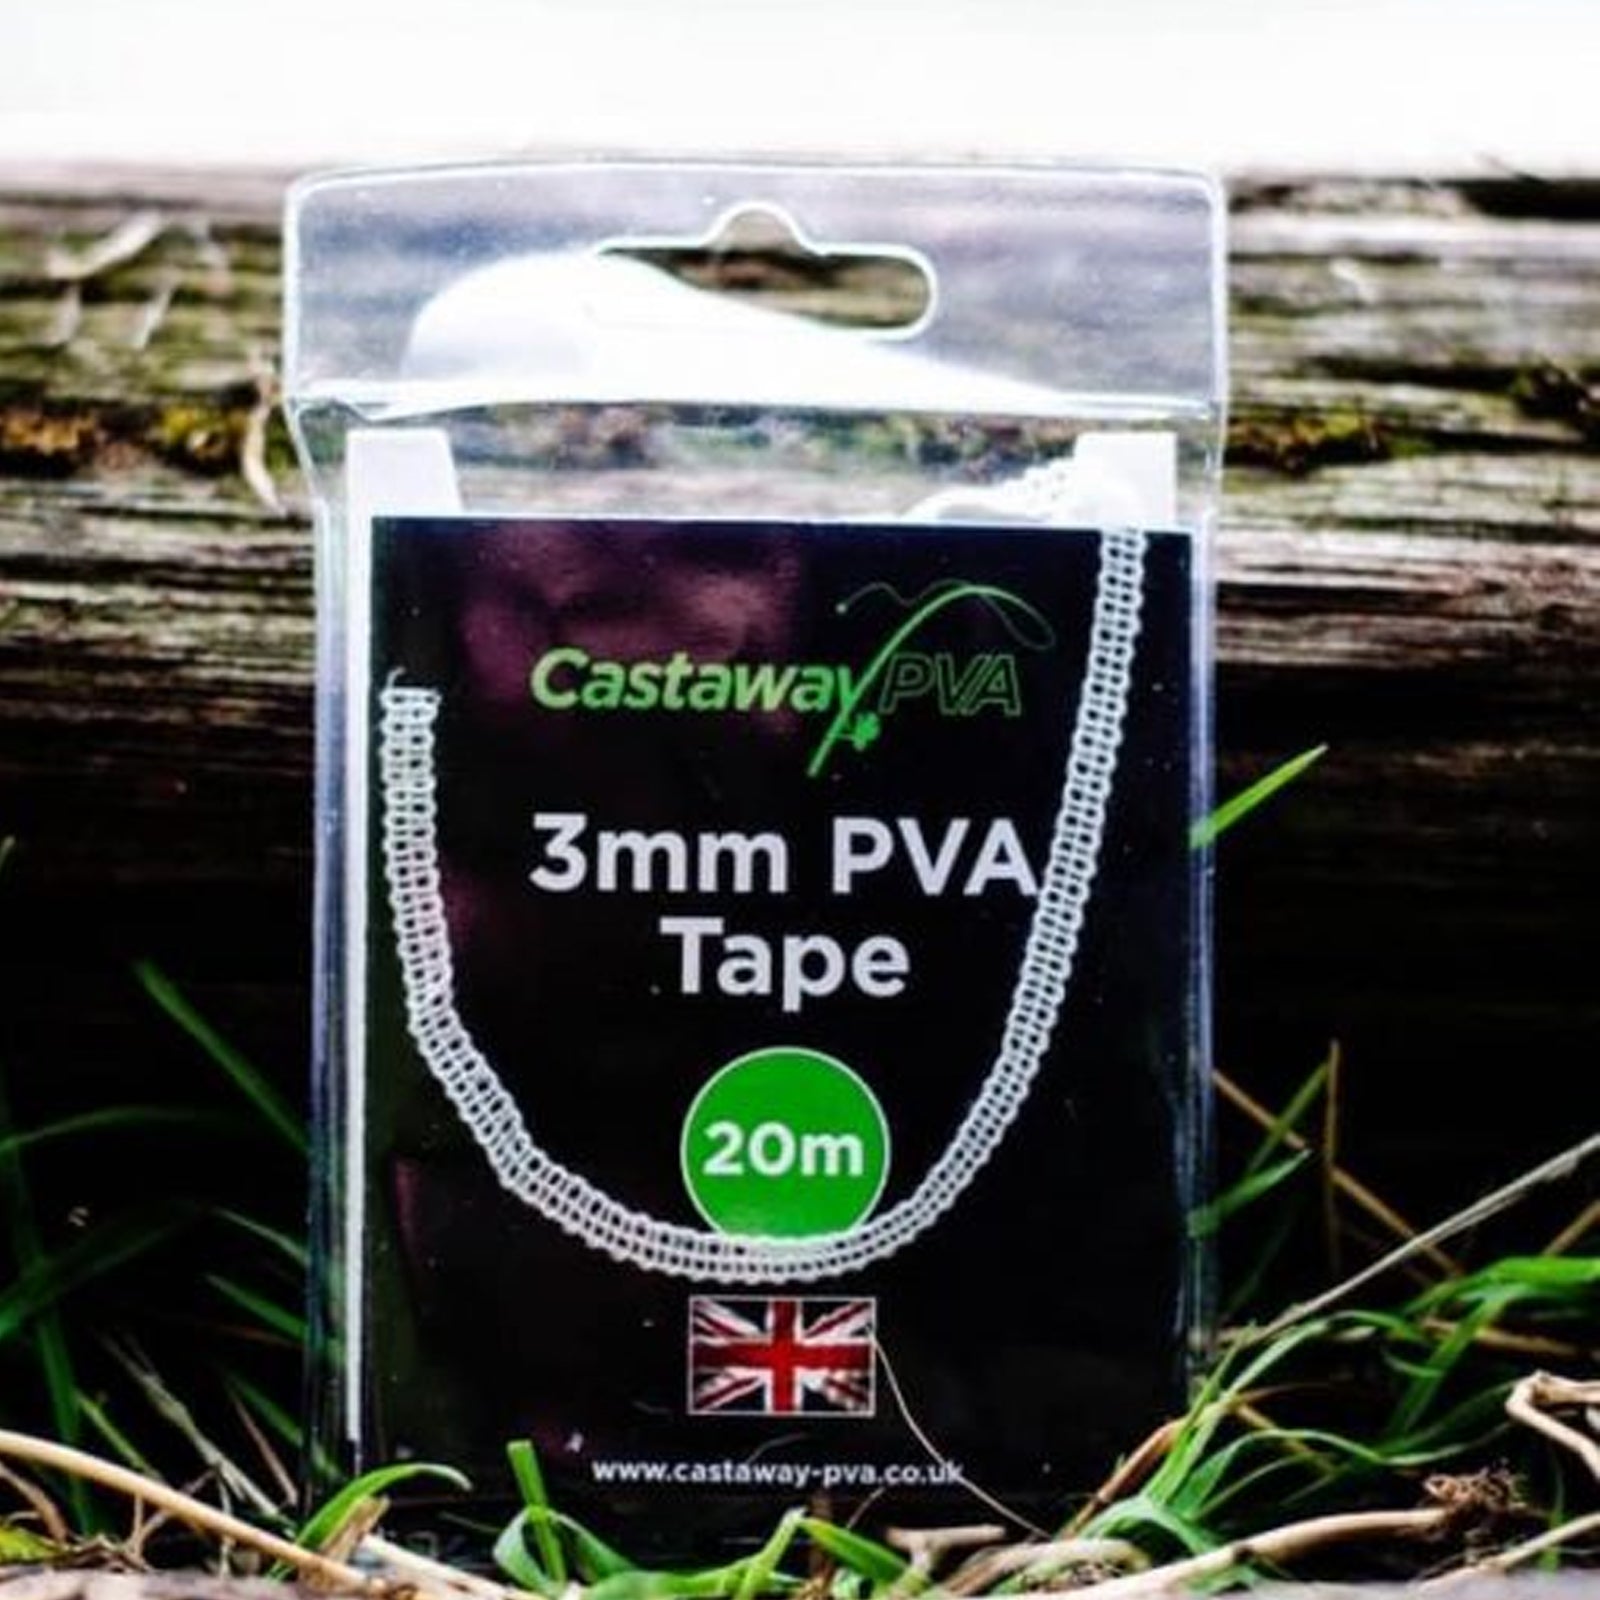 Castaway PVA 3mm PVA Tape 20m Lifestyle Shot